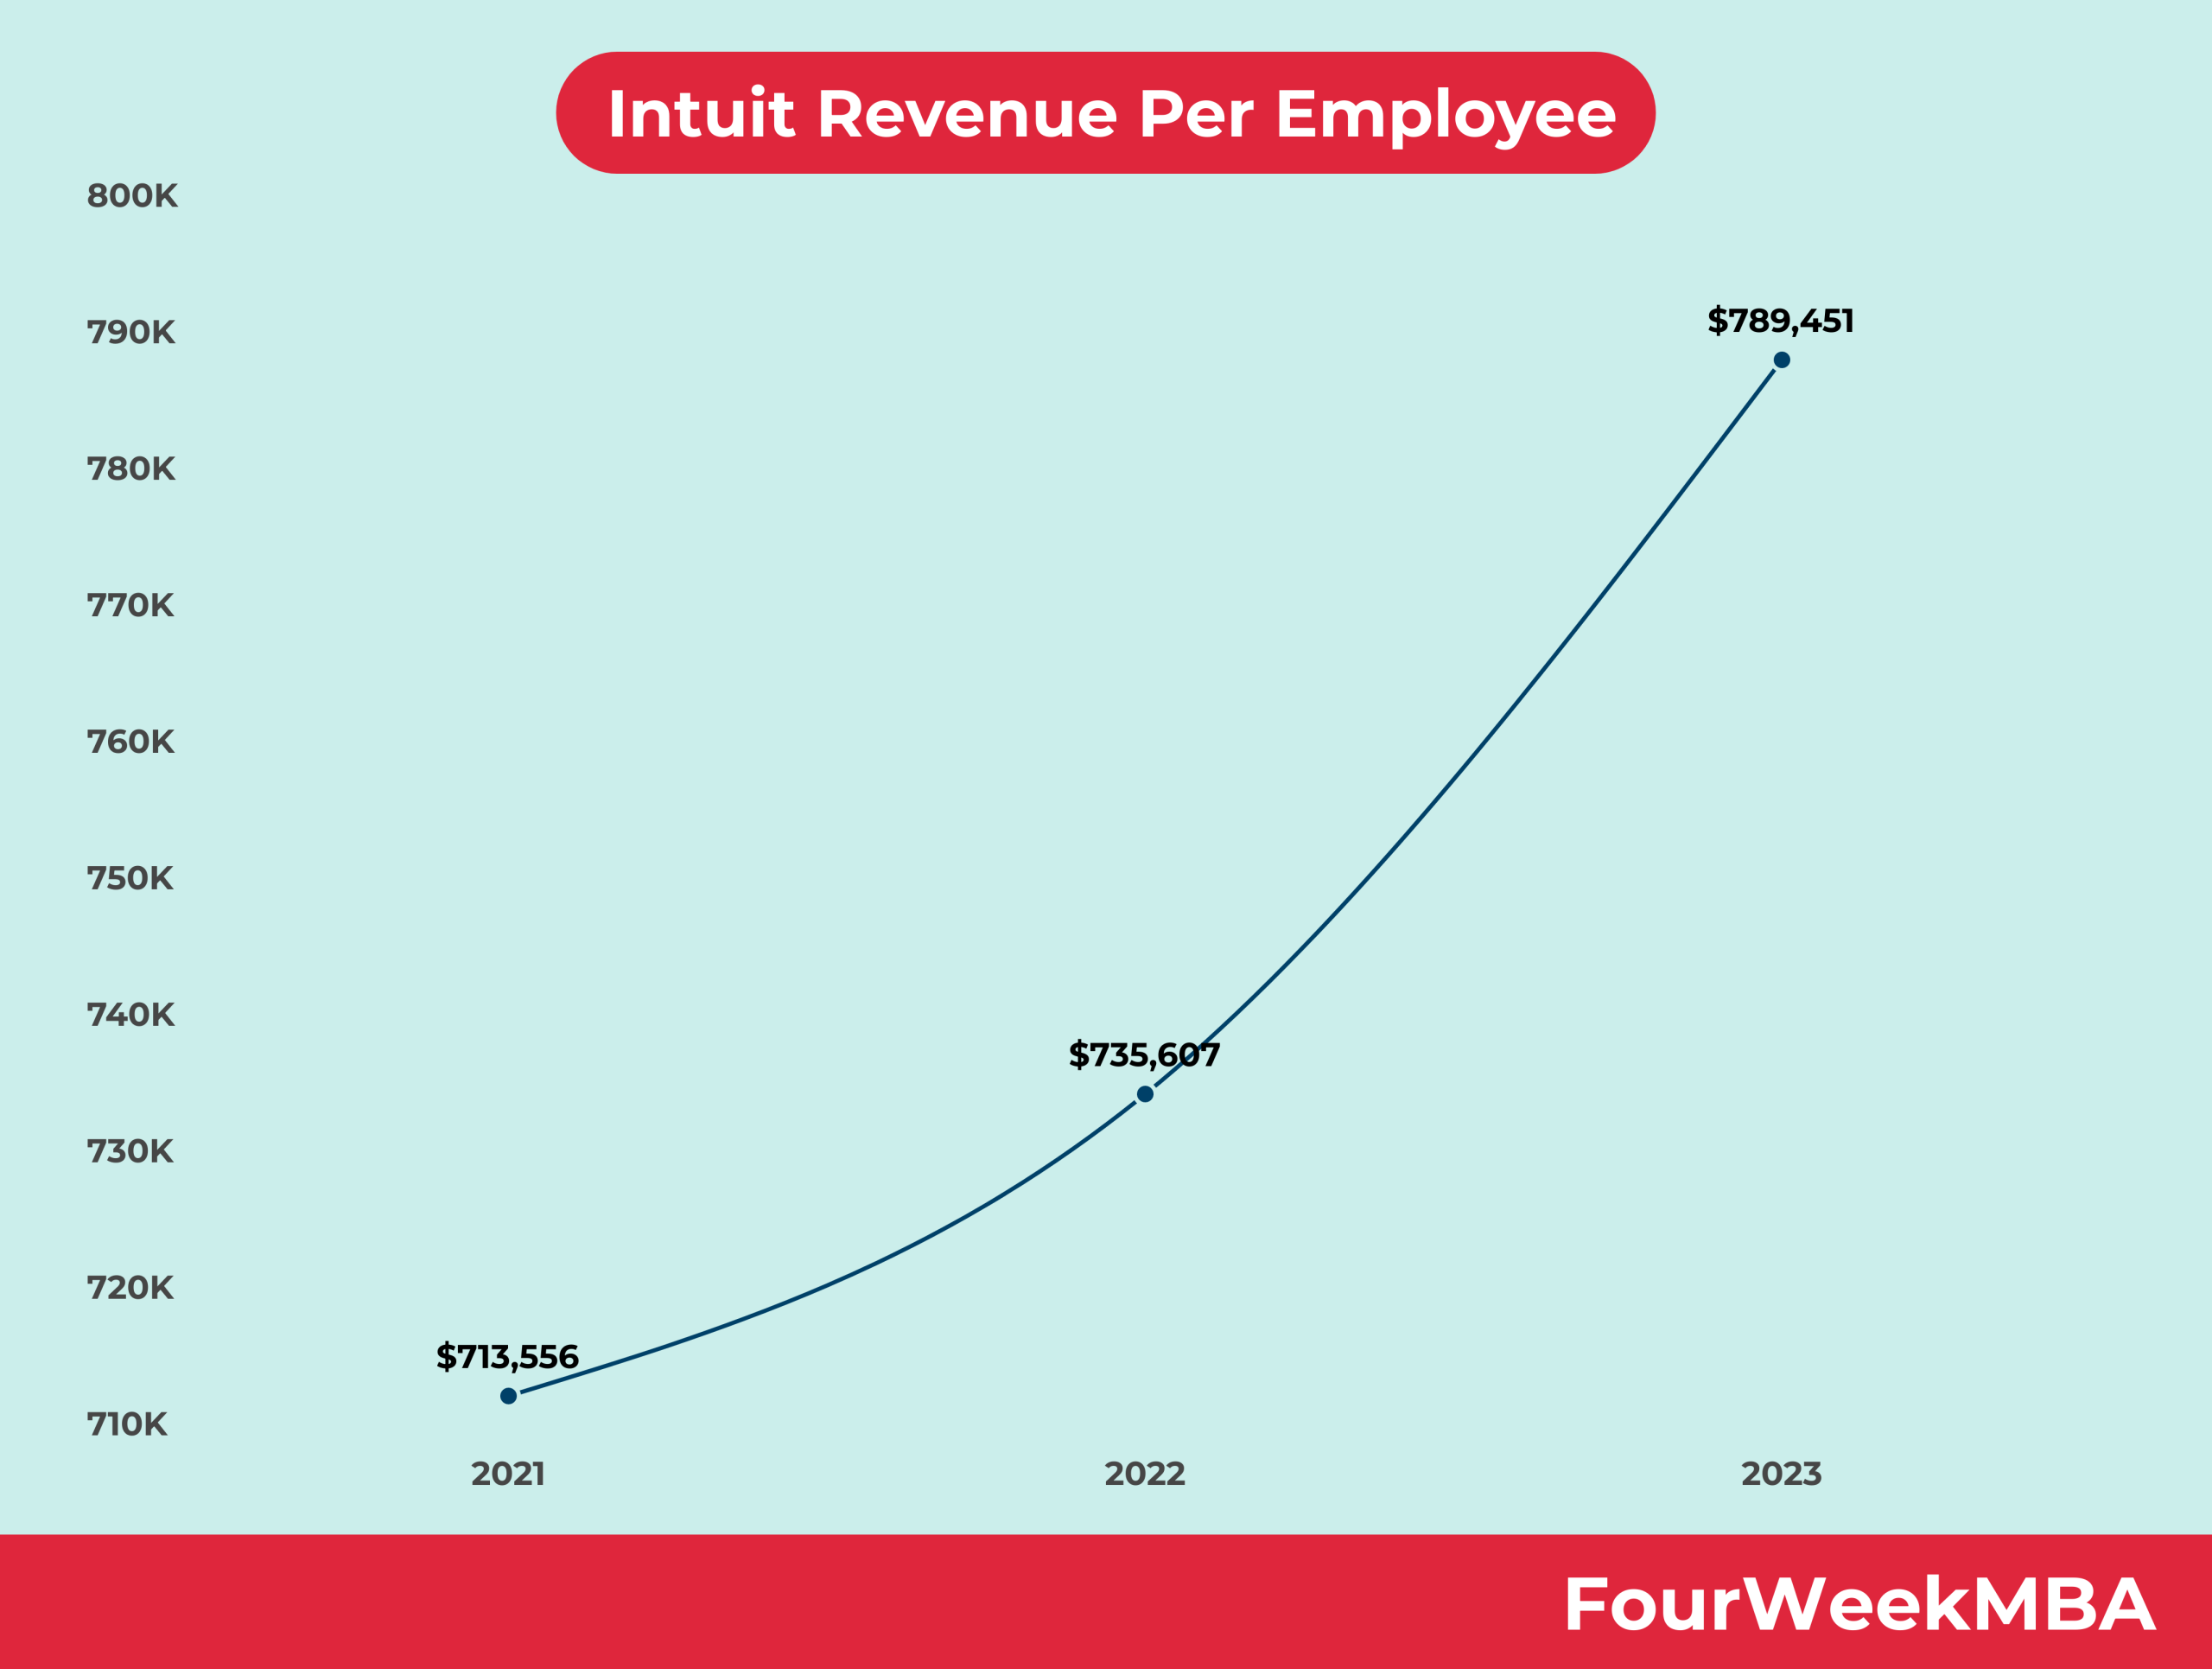 Intuit Revenue per Employee FourWeekMBA